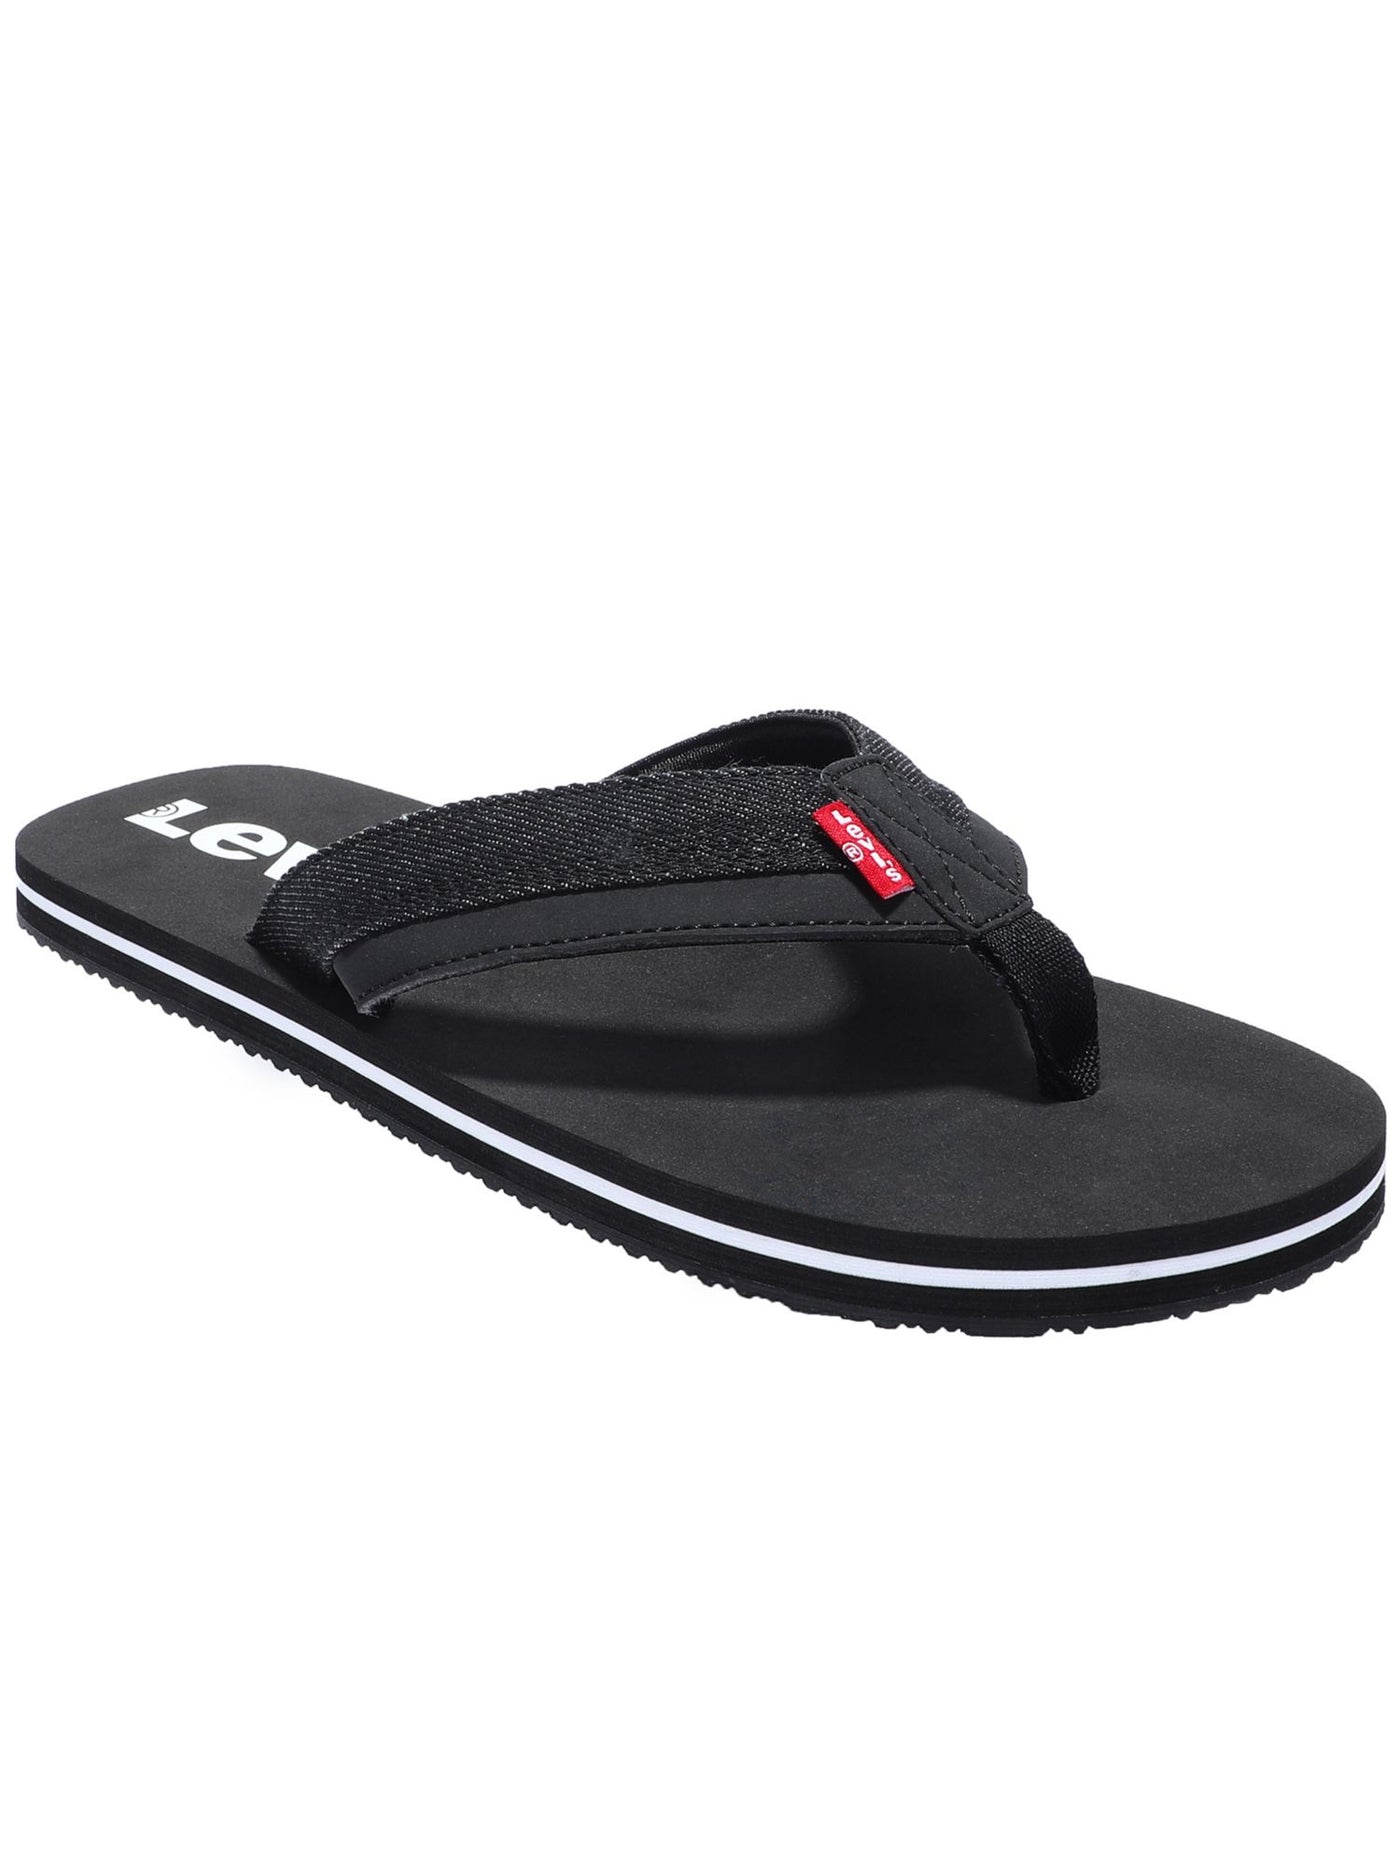 LEVI'S Mens Black Mixed Media Padded Wordmark Round Toe Slip On Thong Sandals Shoes 12